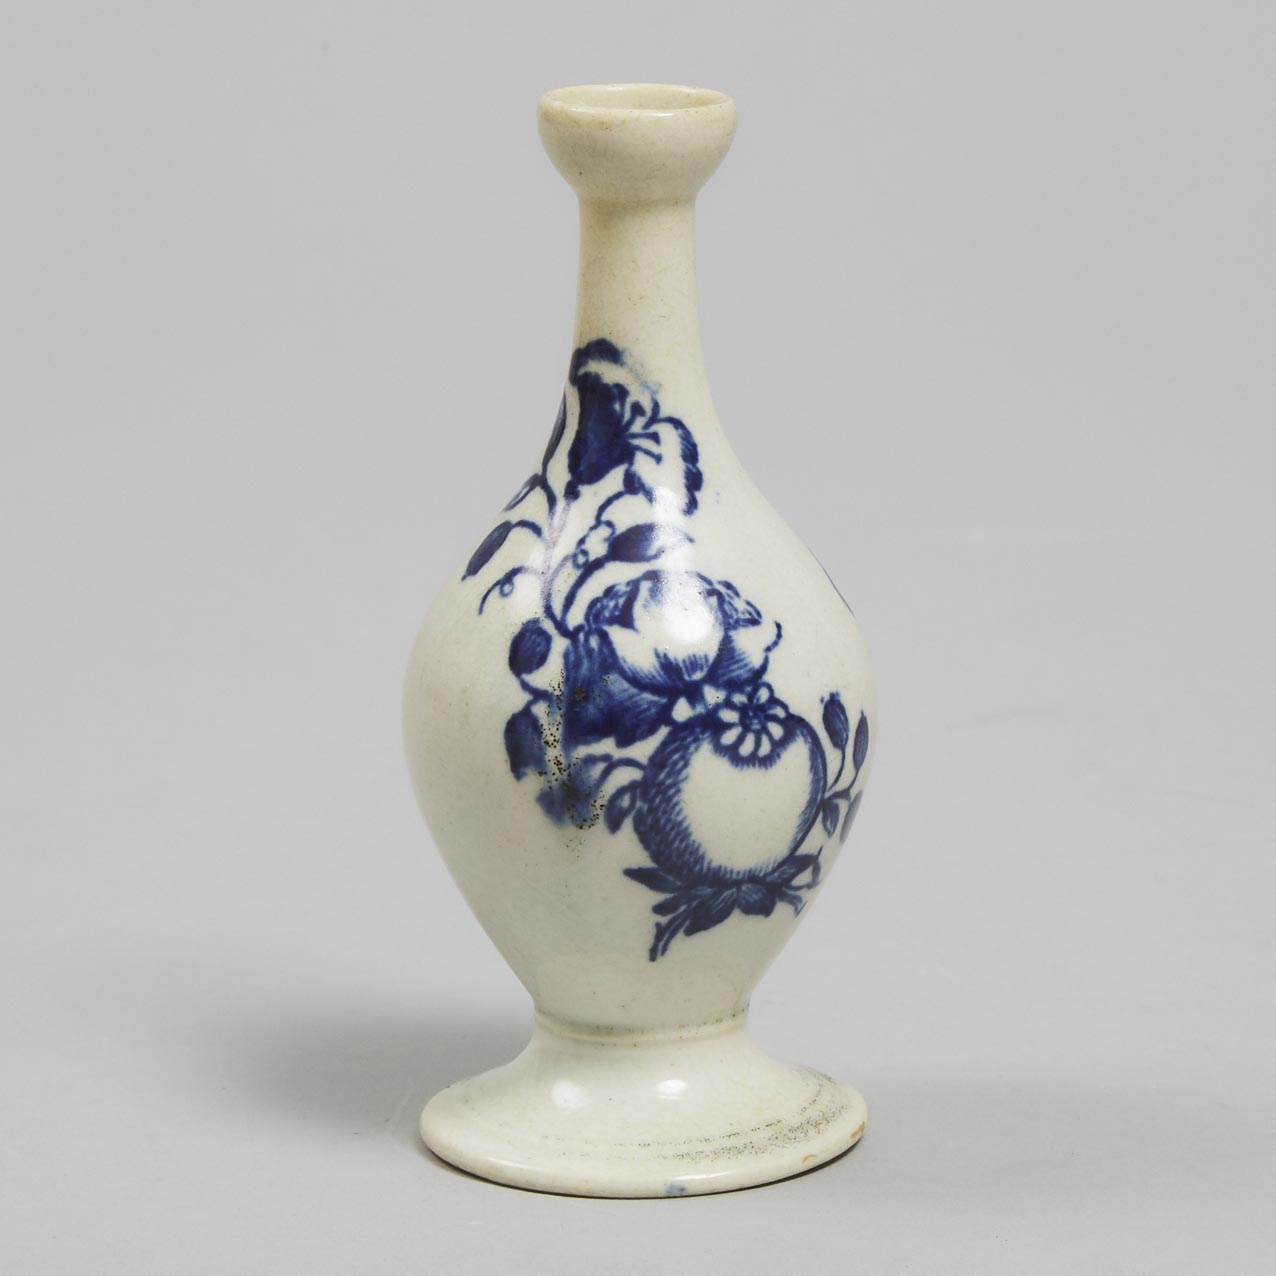 Pennington's Liverpool Small Vase, c.1780